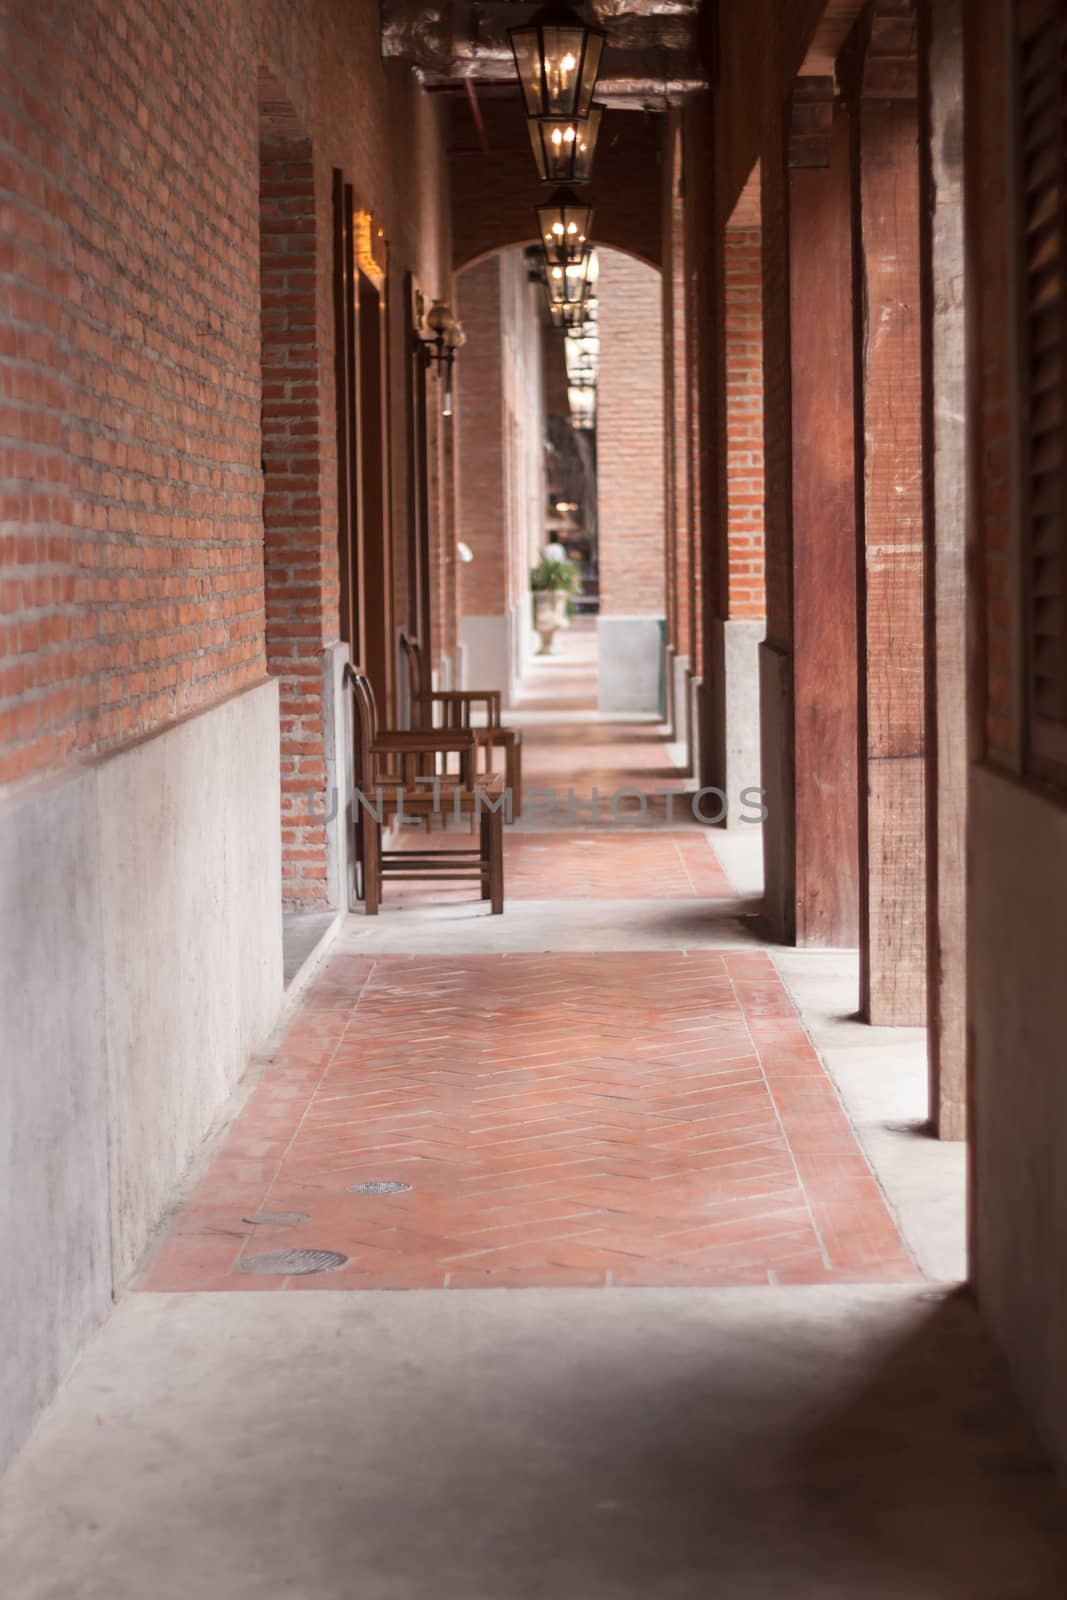 Walkway along the red brick wall, stock photo